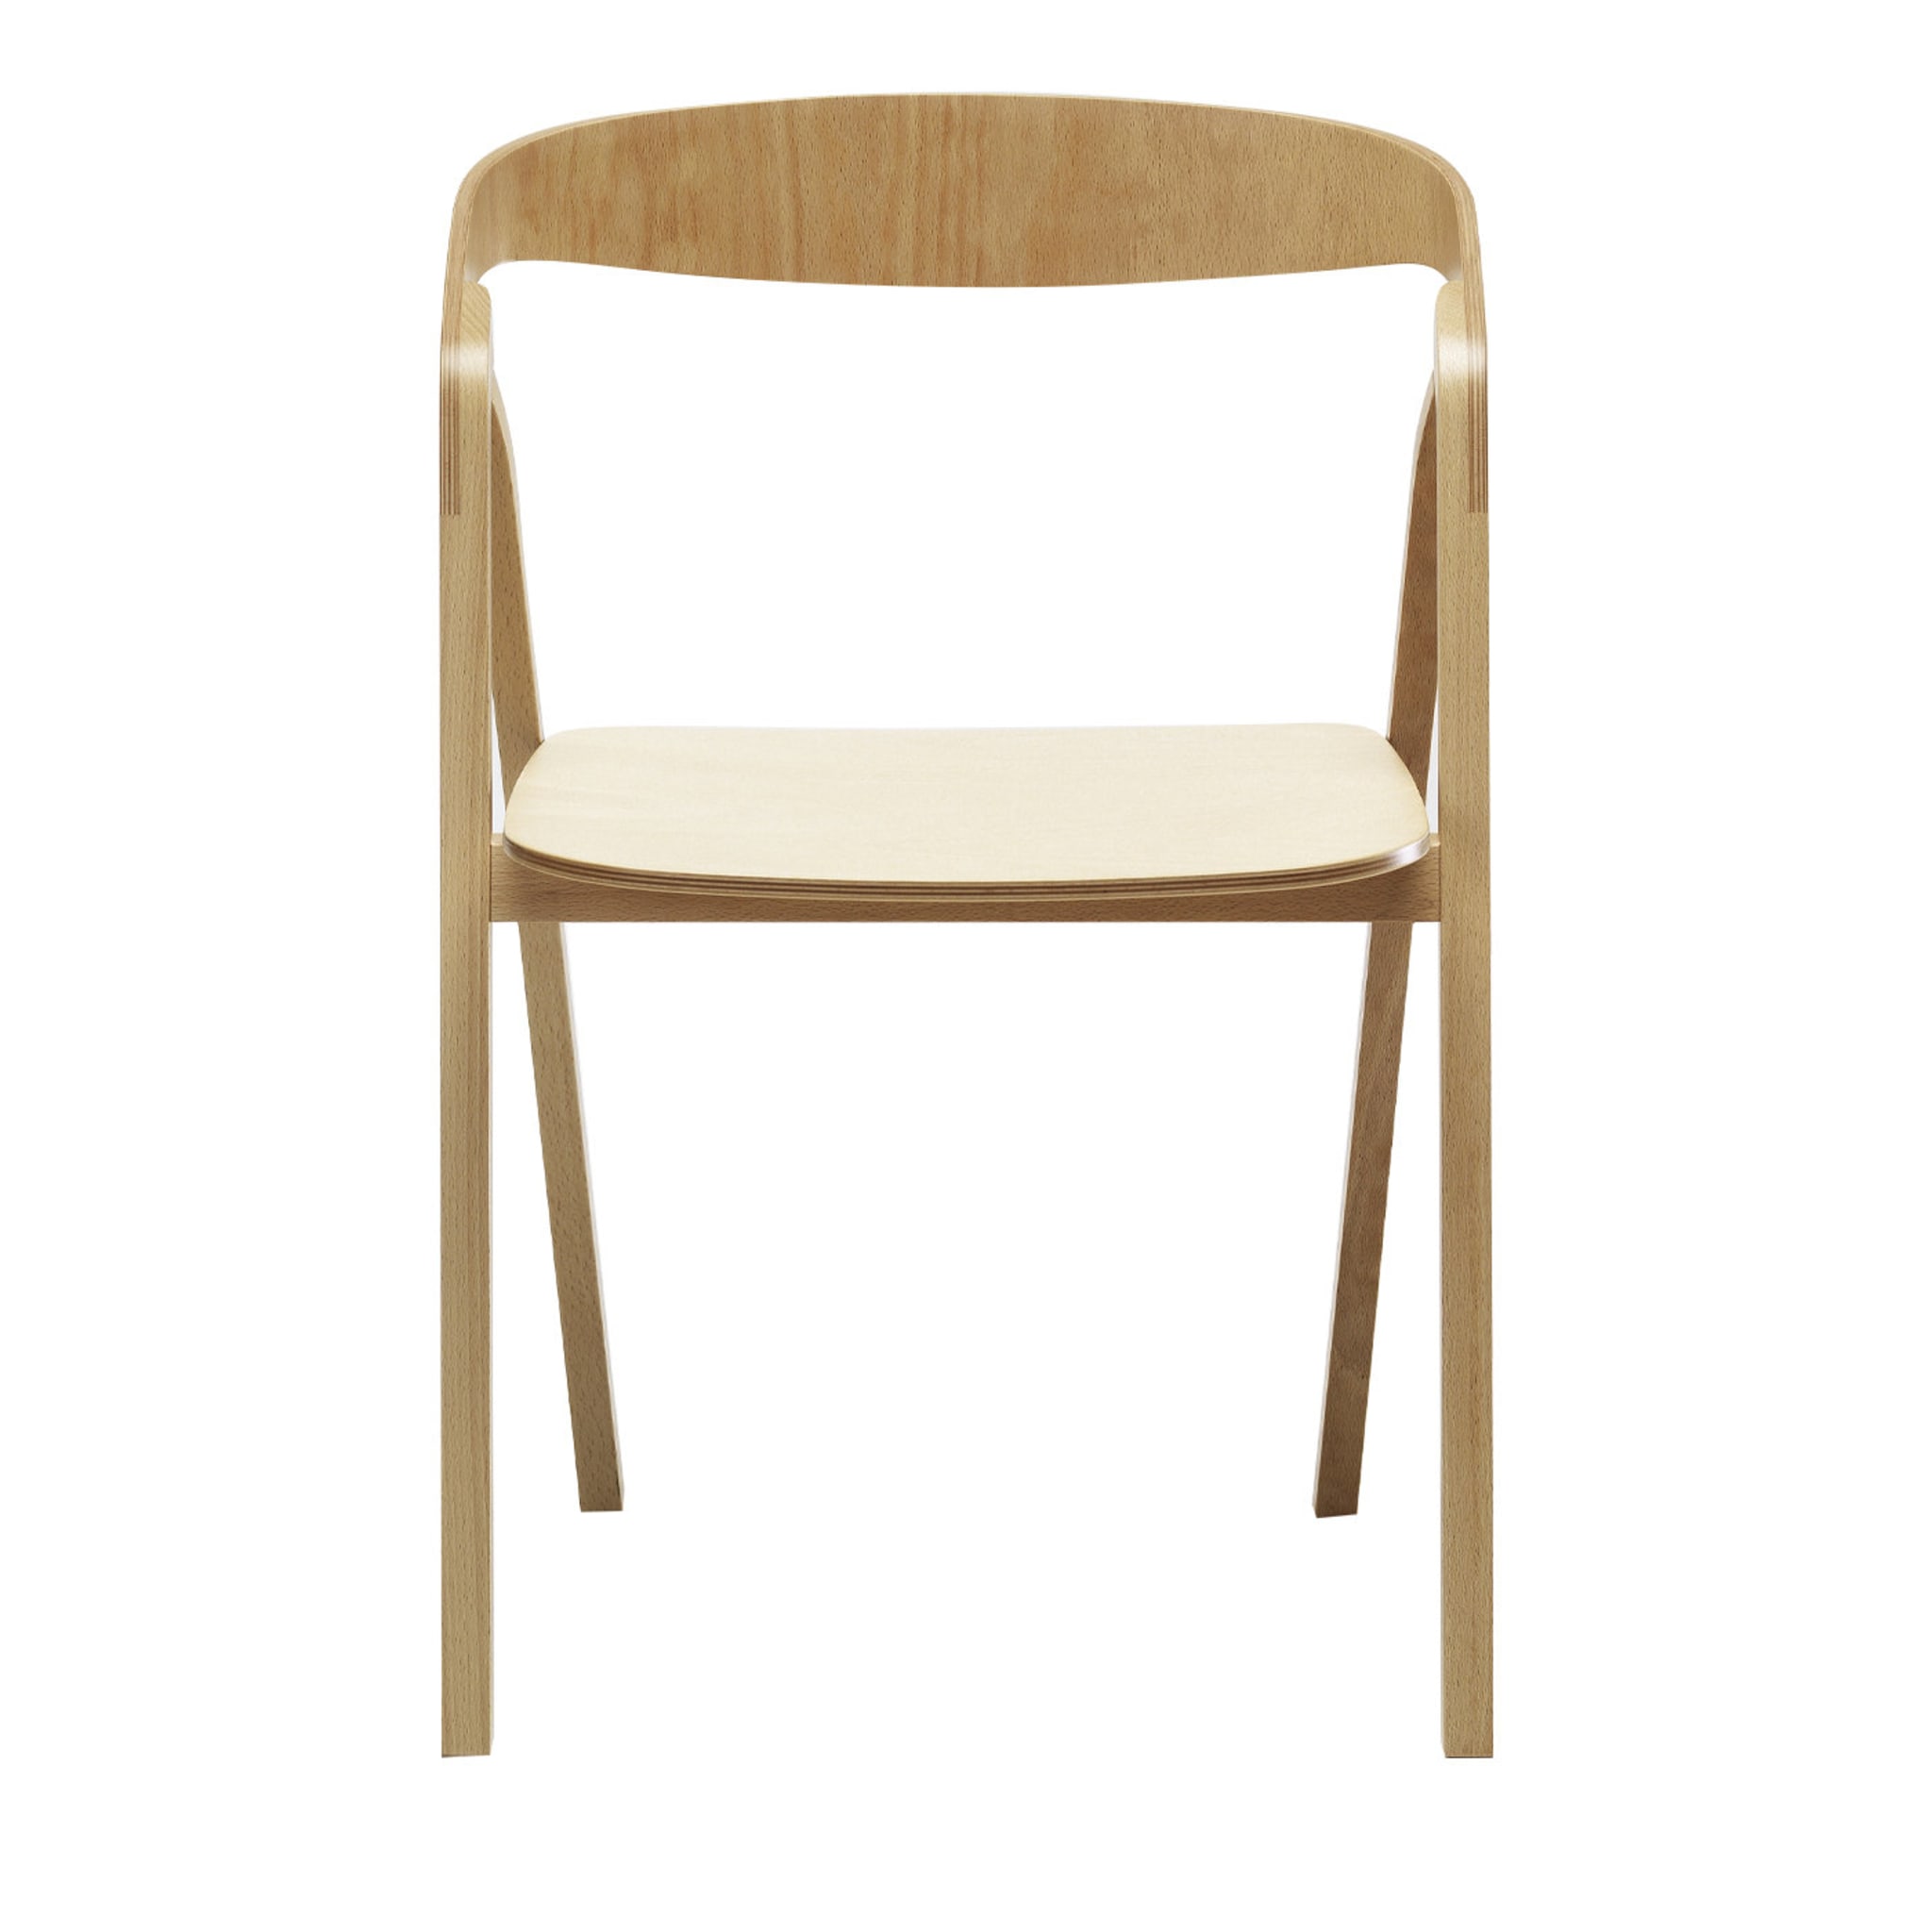 Set of 2 Sta Chairs by Tomoko Azumi - Main view